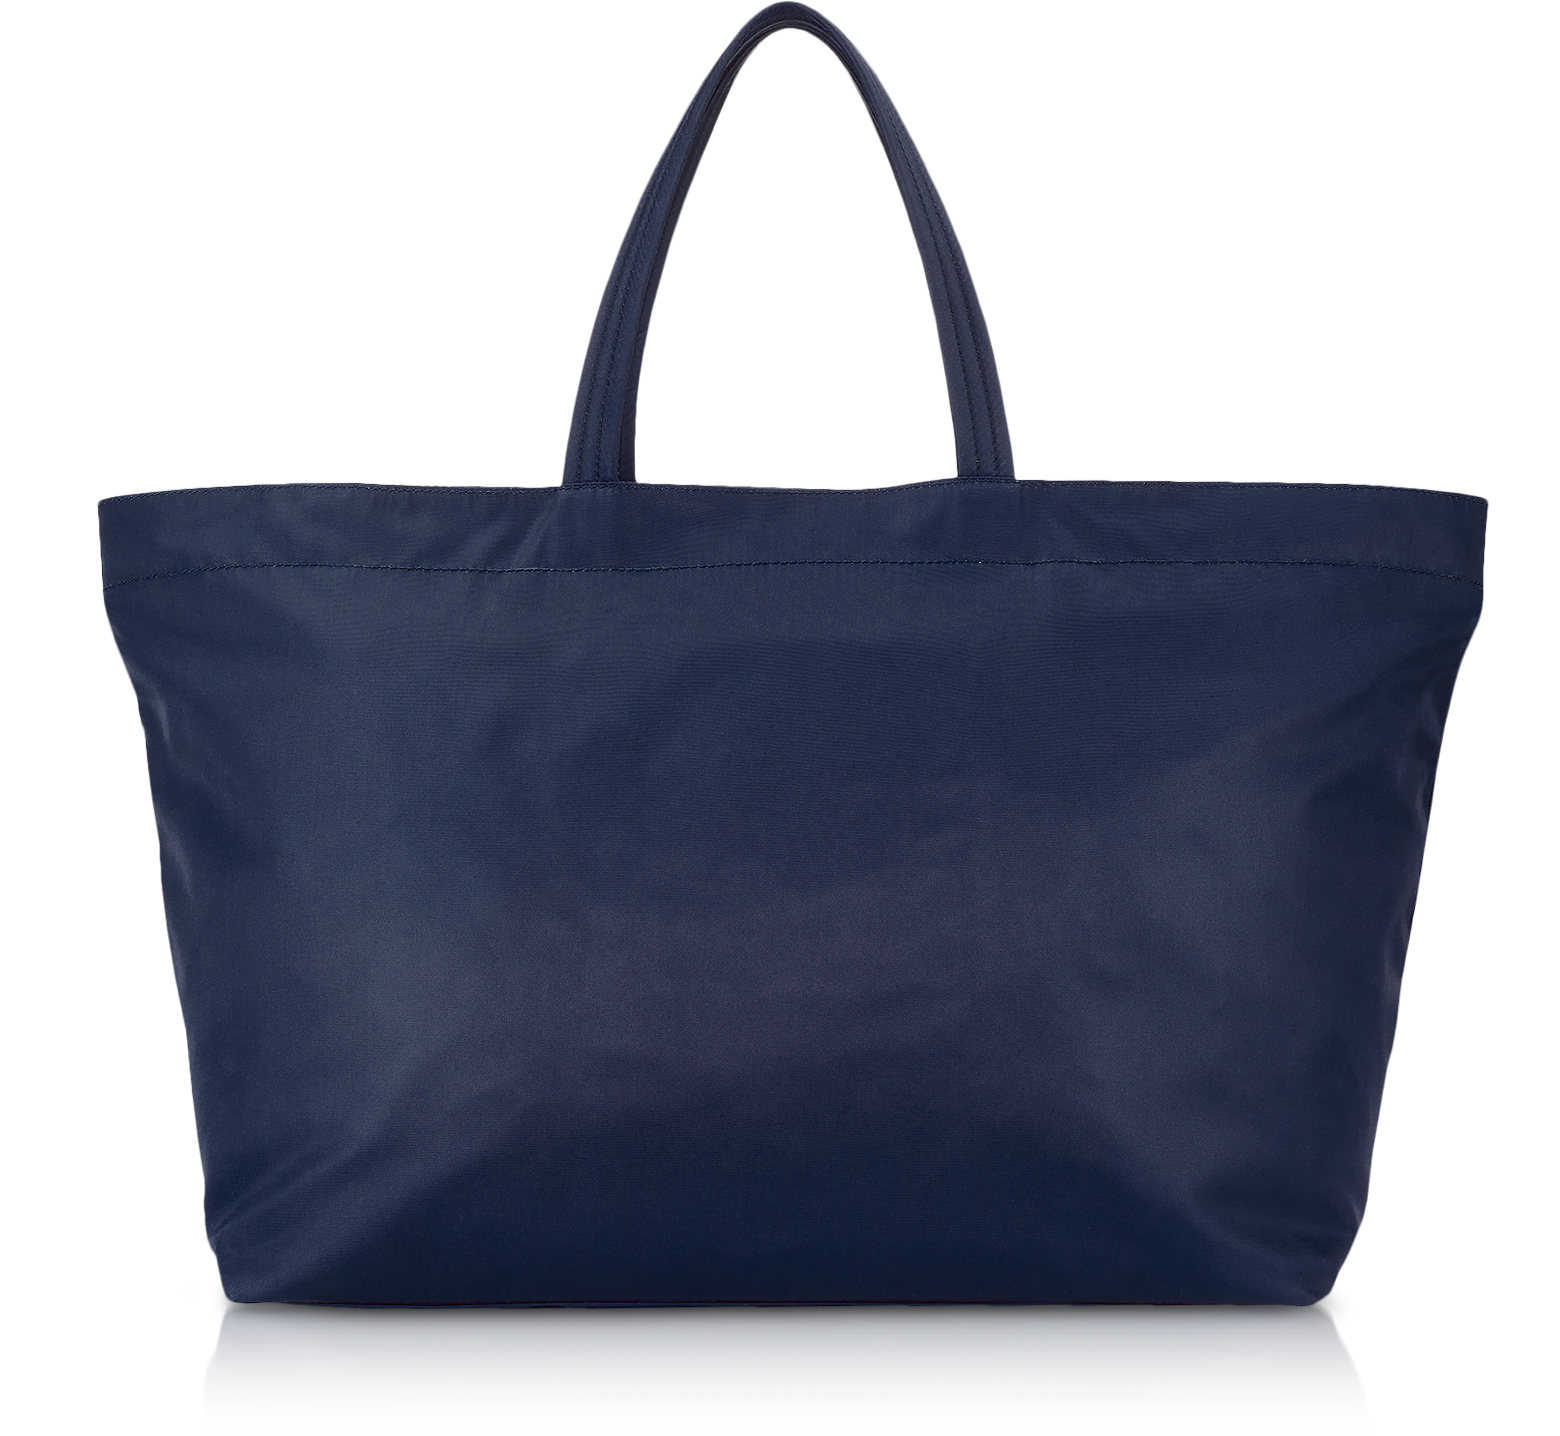 Starlight Crossbody Bag – Anabaglish